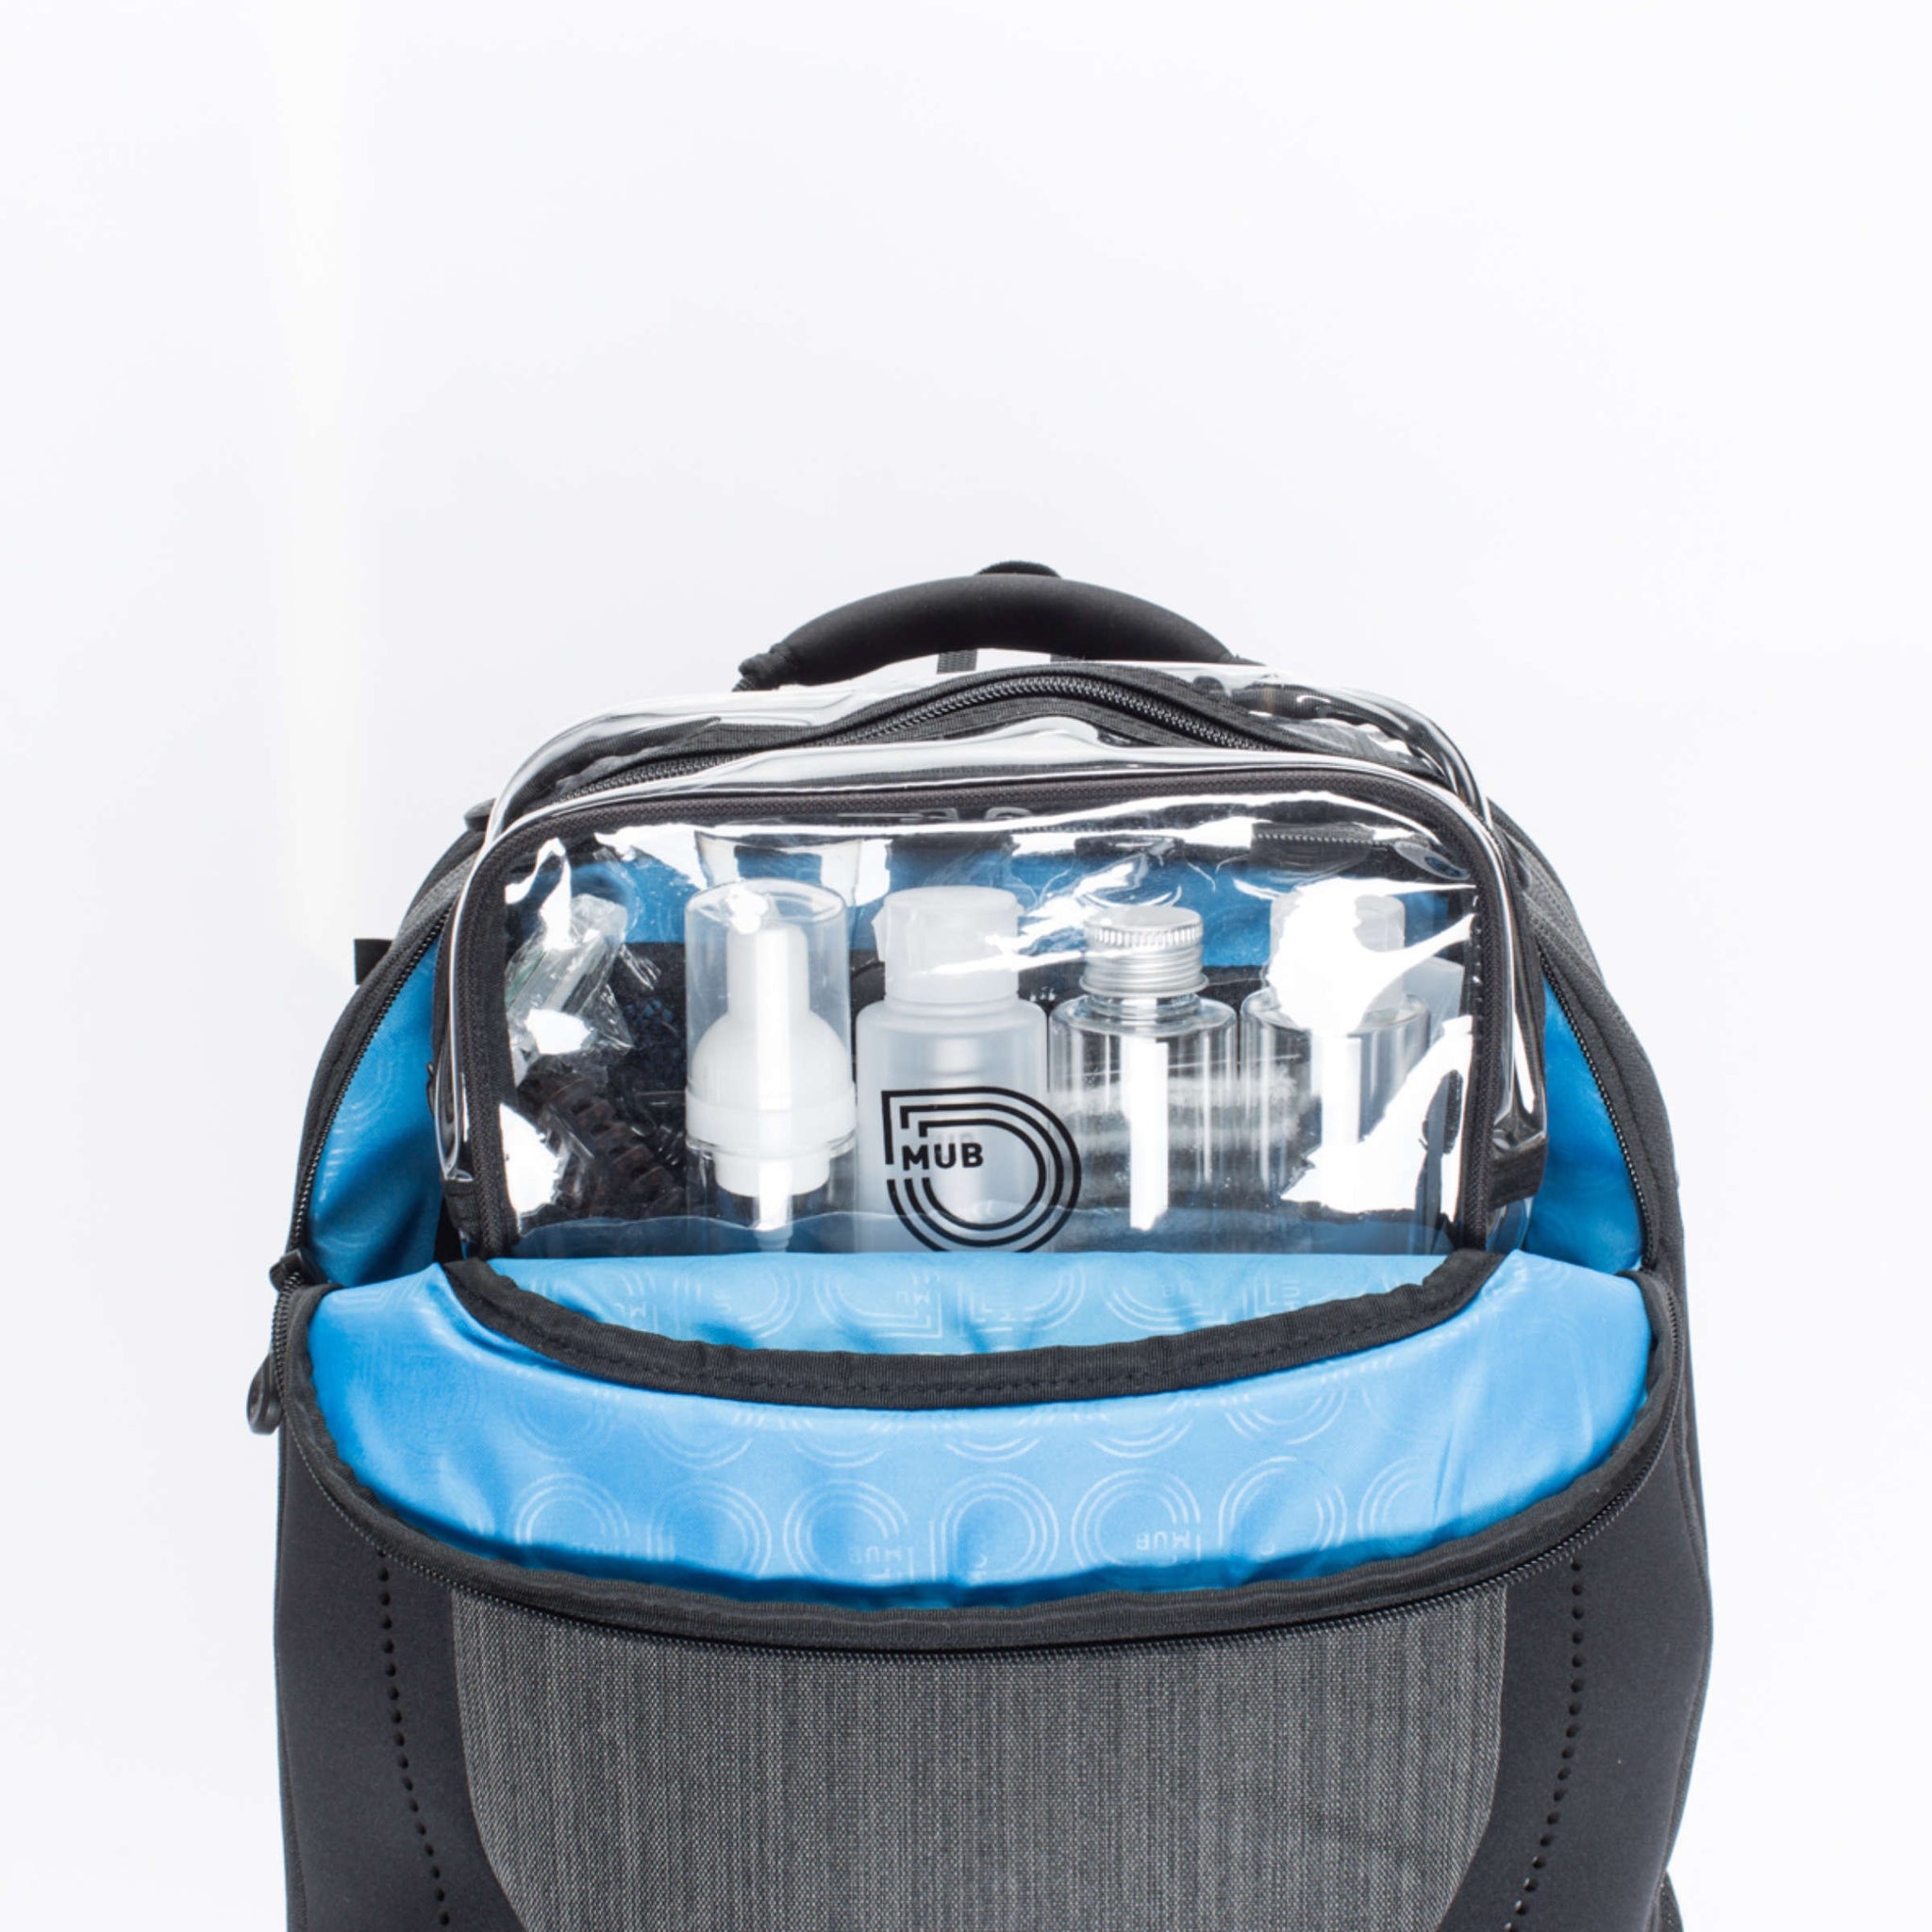 MUB TRAVELER REGULAR Grey - The BiarritzI Deluxe Travel Backpack for Men